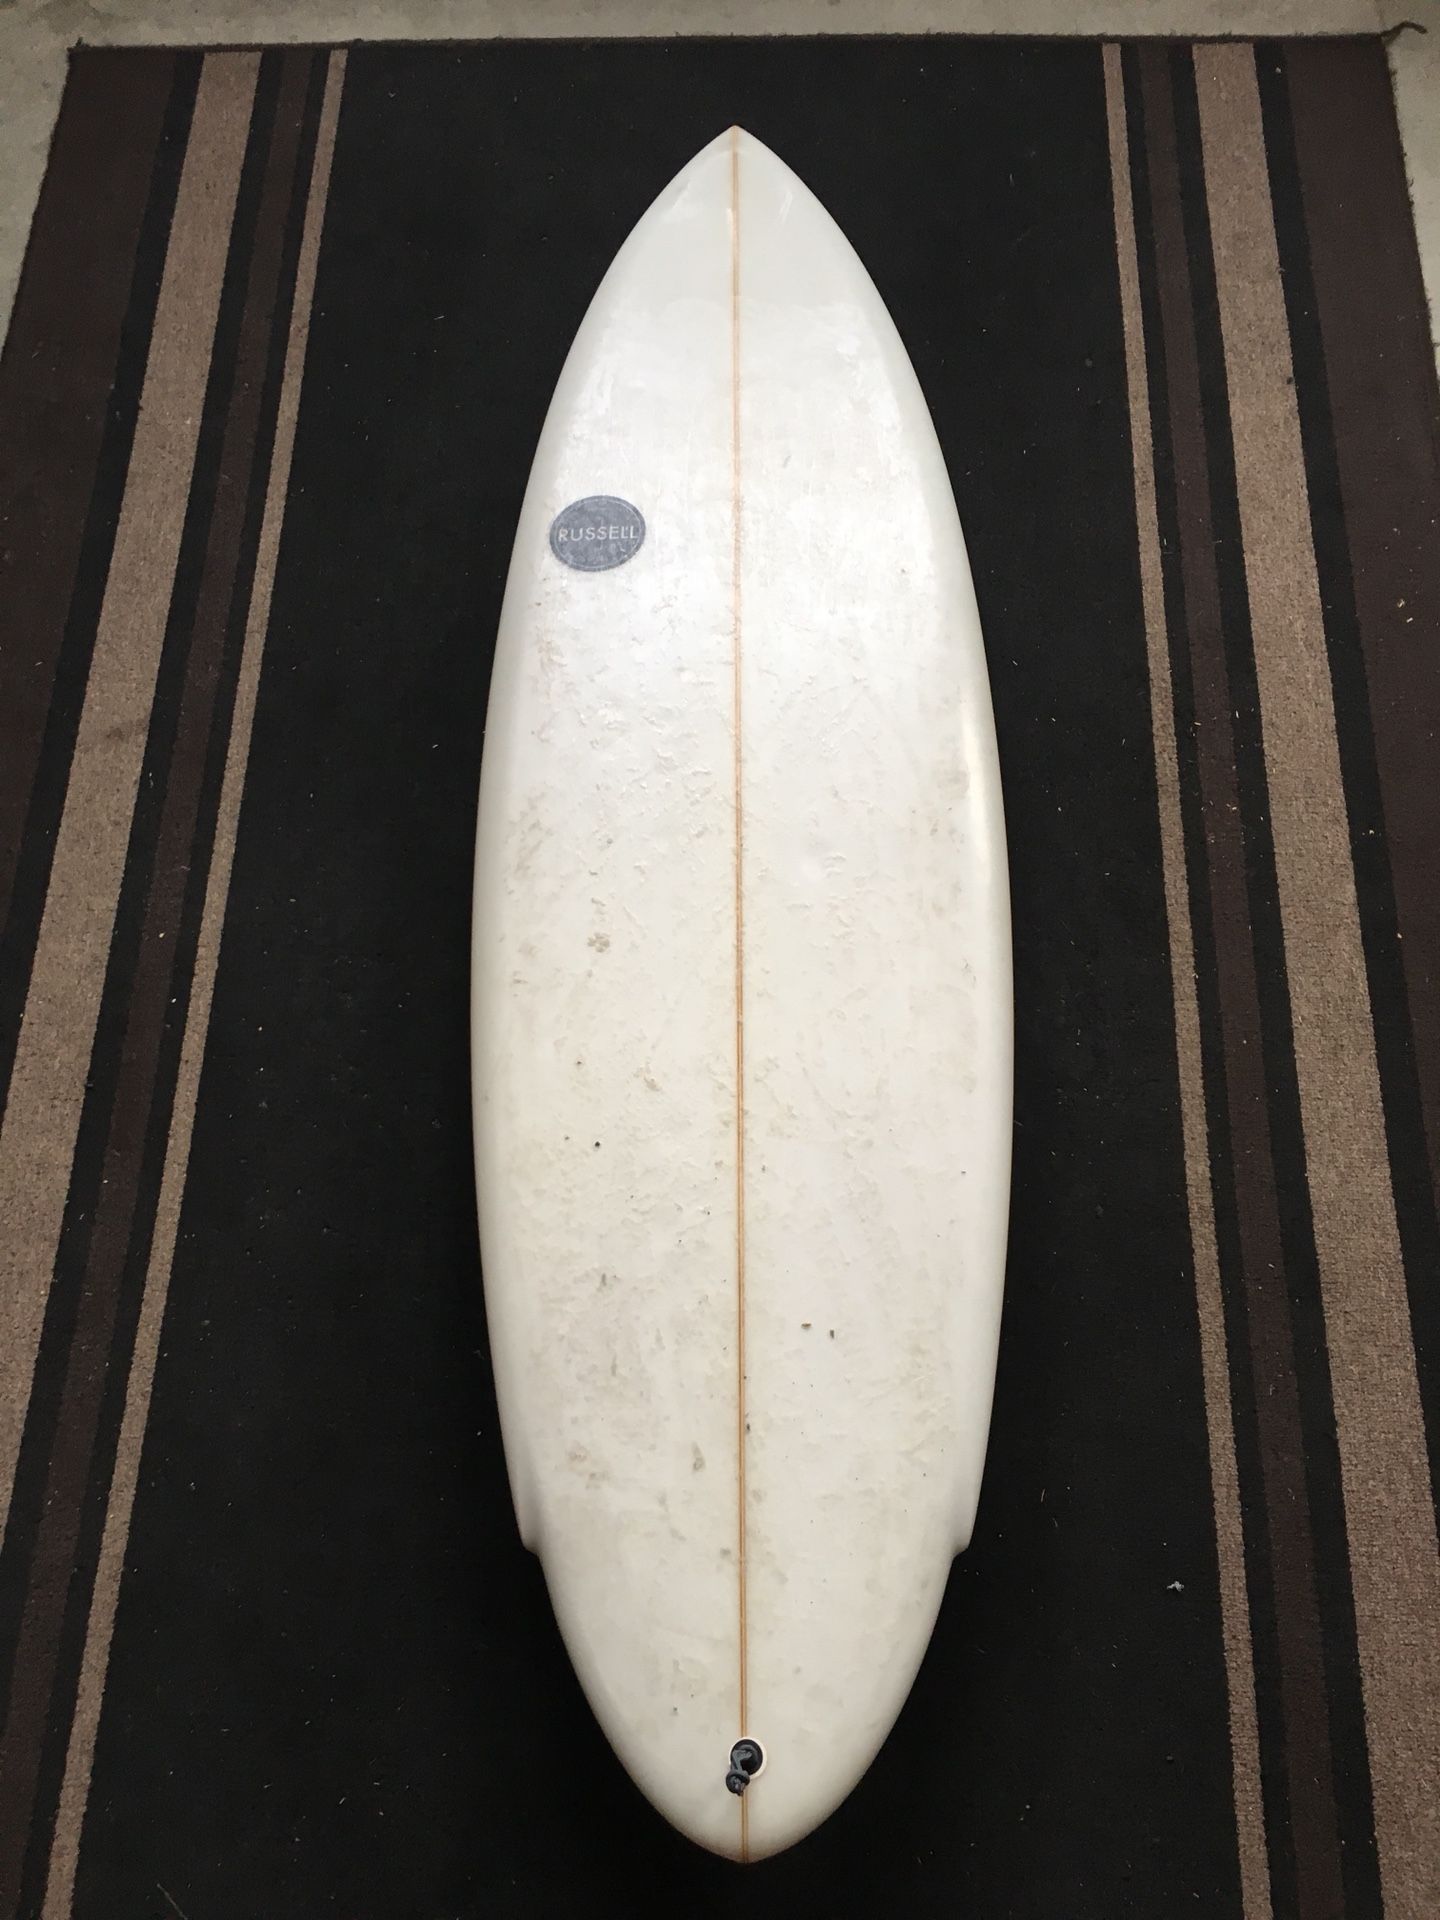 5’ 6 surfboard